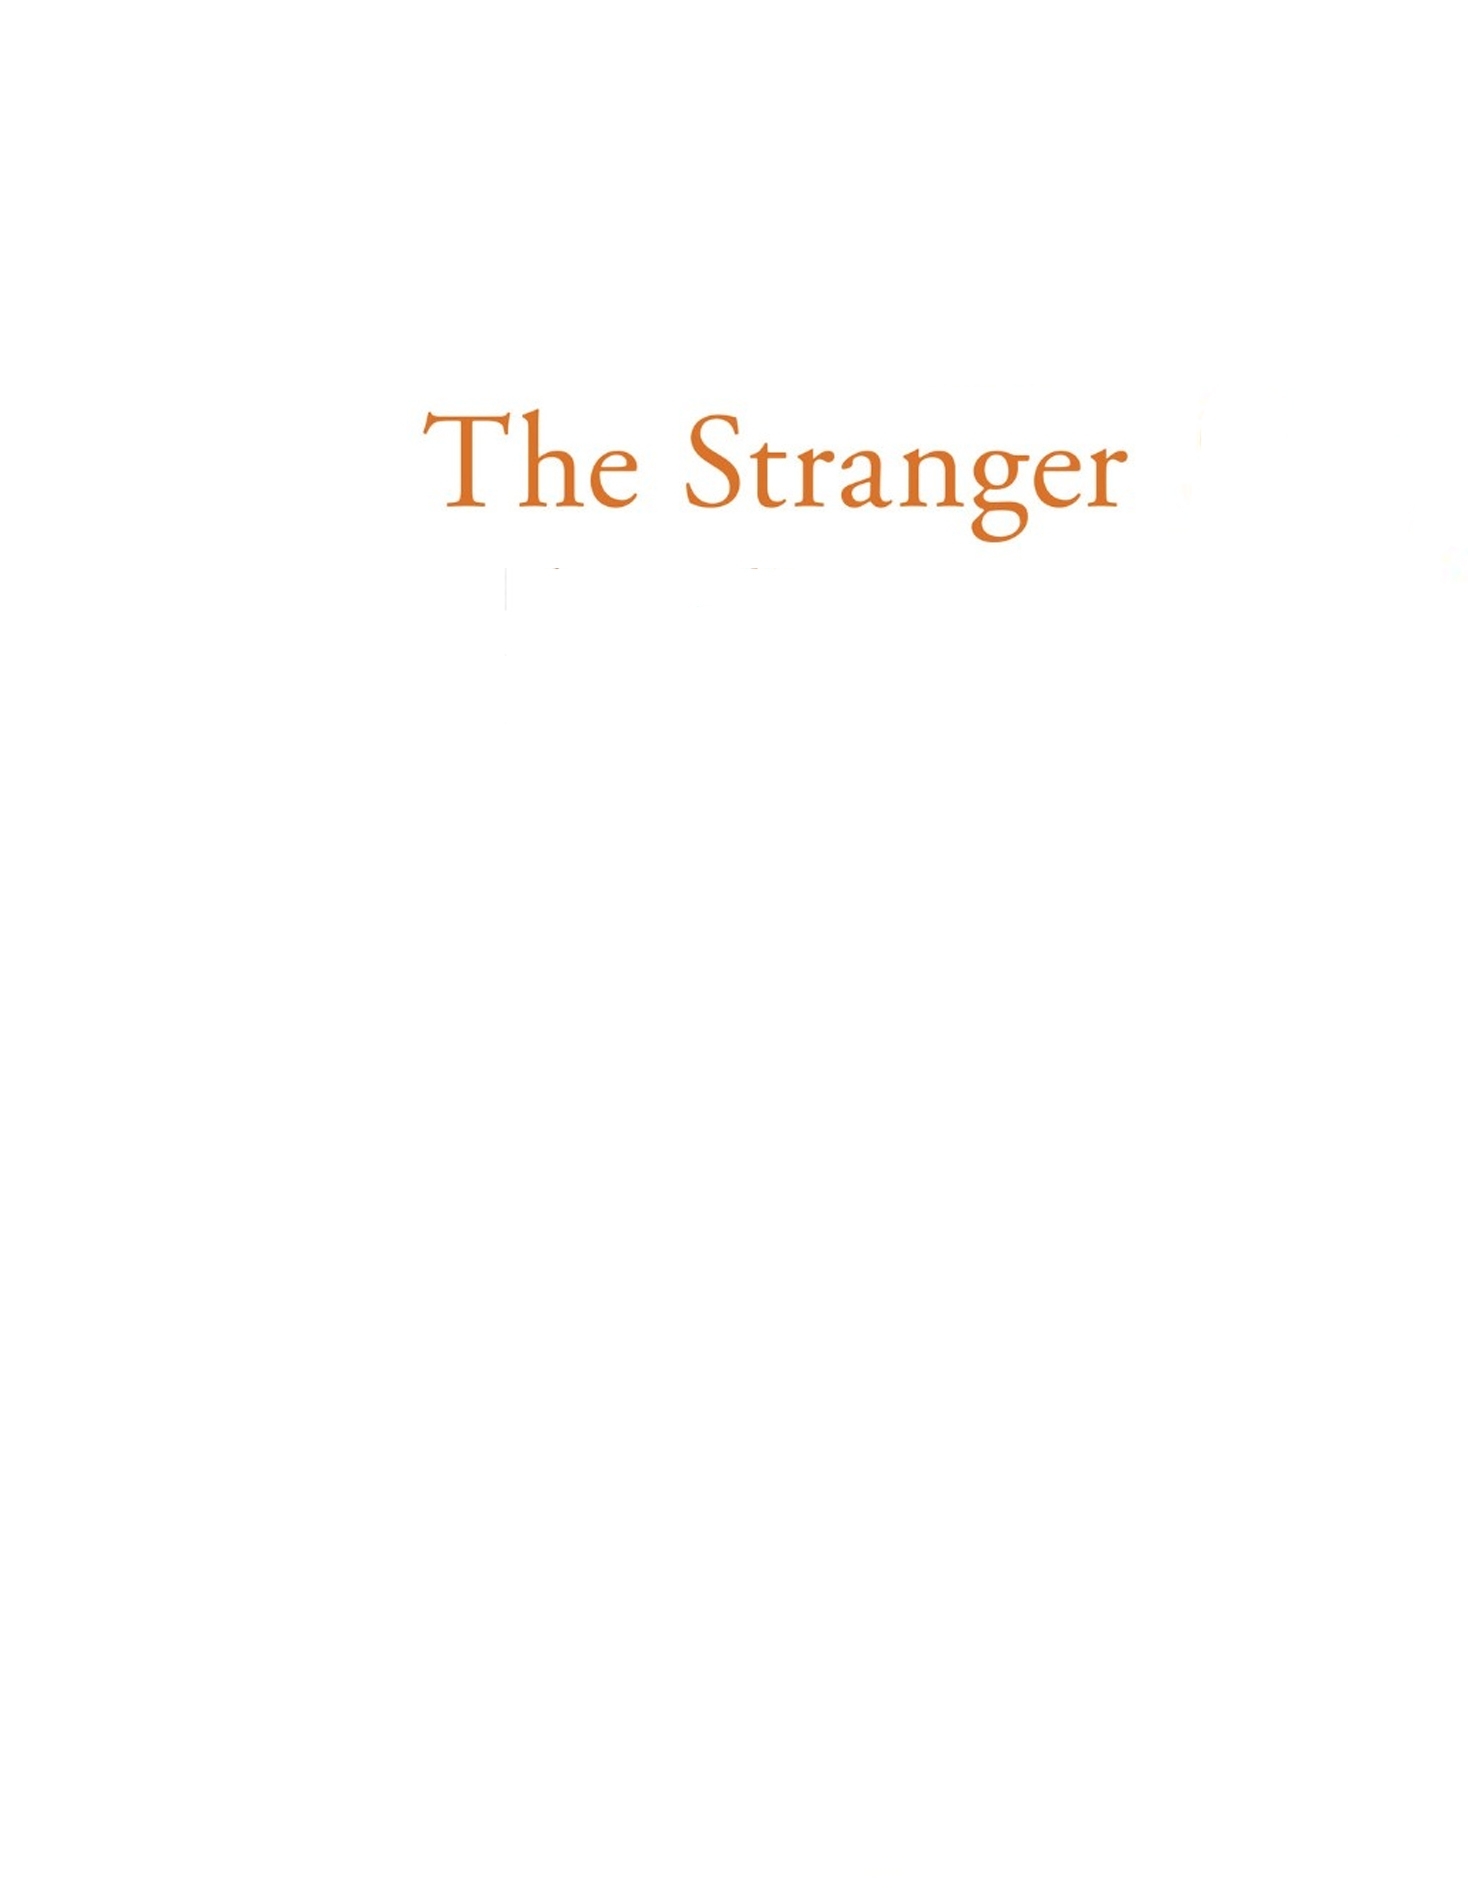 Read online The Stranger: The Graphic Novel comic -  Issue # TPB - 6